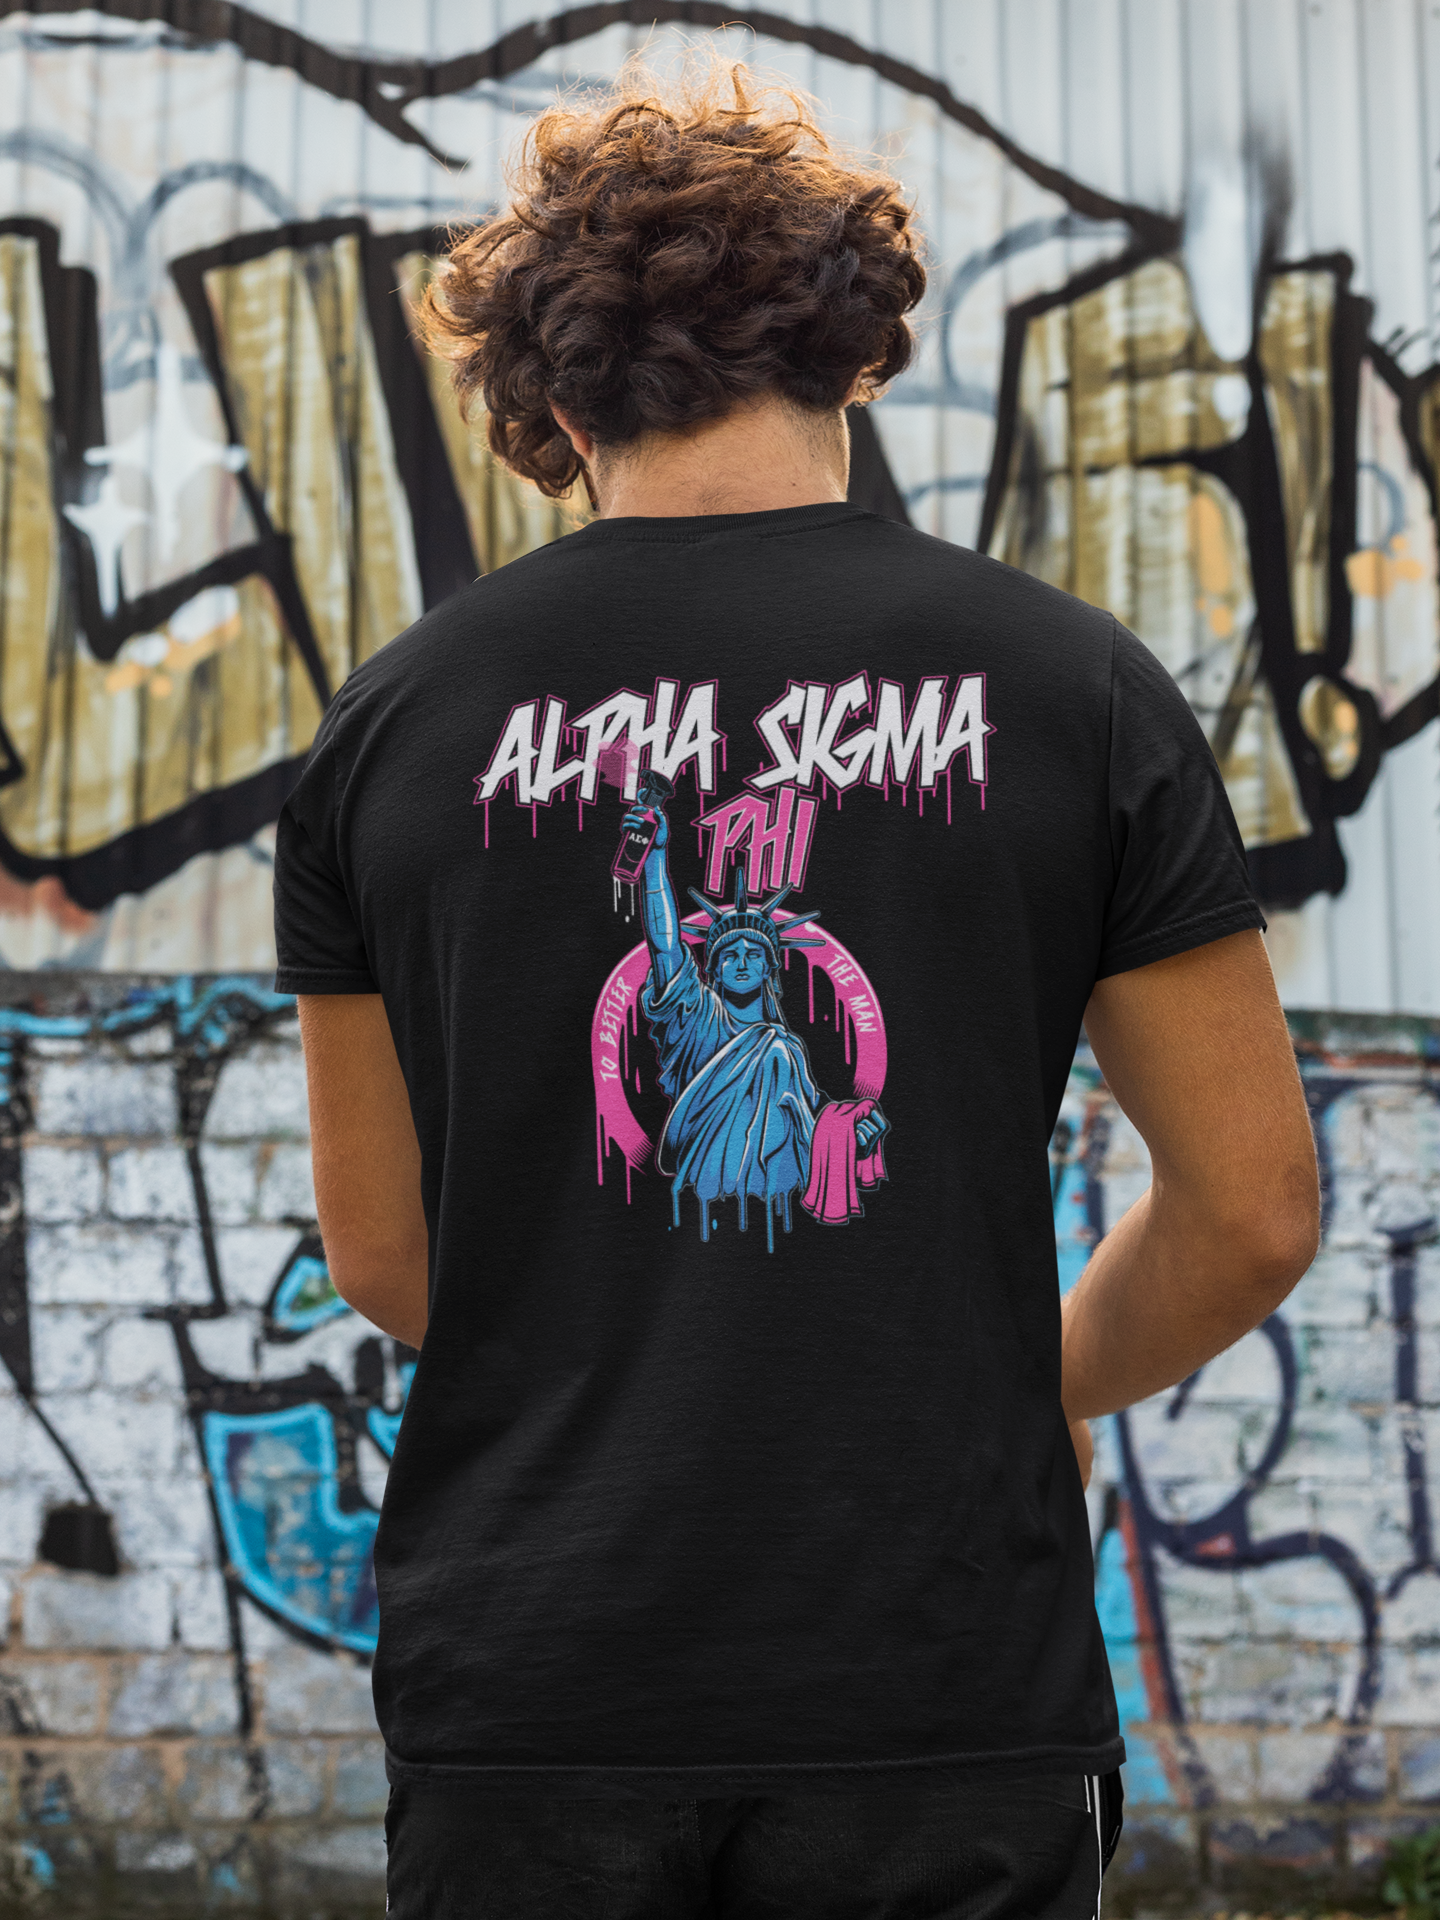 Alpha Sigma Phi Graphic T-Shirt | Liberty Rebel | Alpha Sigma Phi Fraternity Shirt  back model 